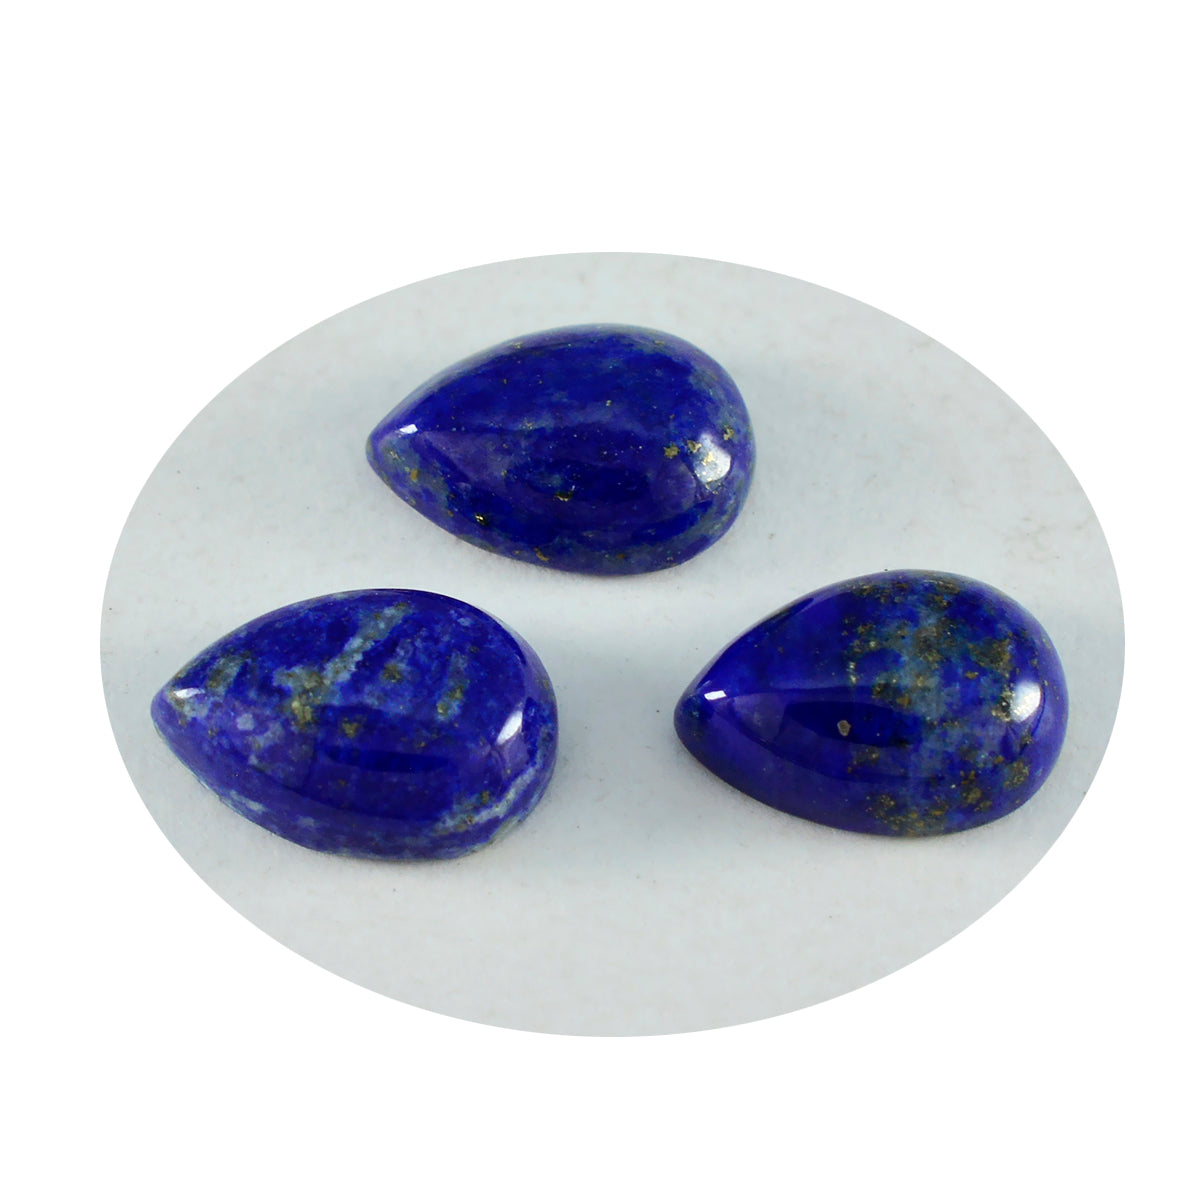 Riyogems 1PC Blue Lapis Lazuli Cabochon 8x12 mm Pear Shape Nice Quality Loose Gemstone